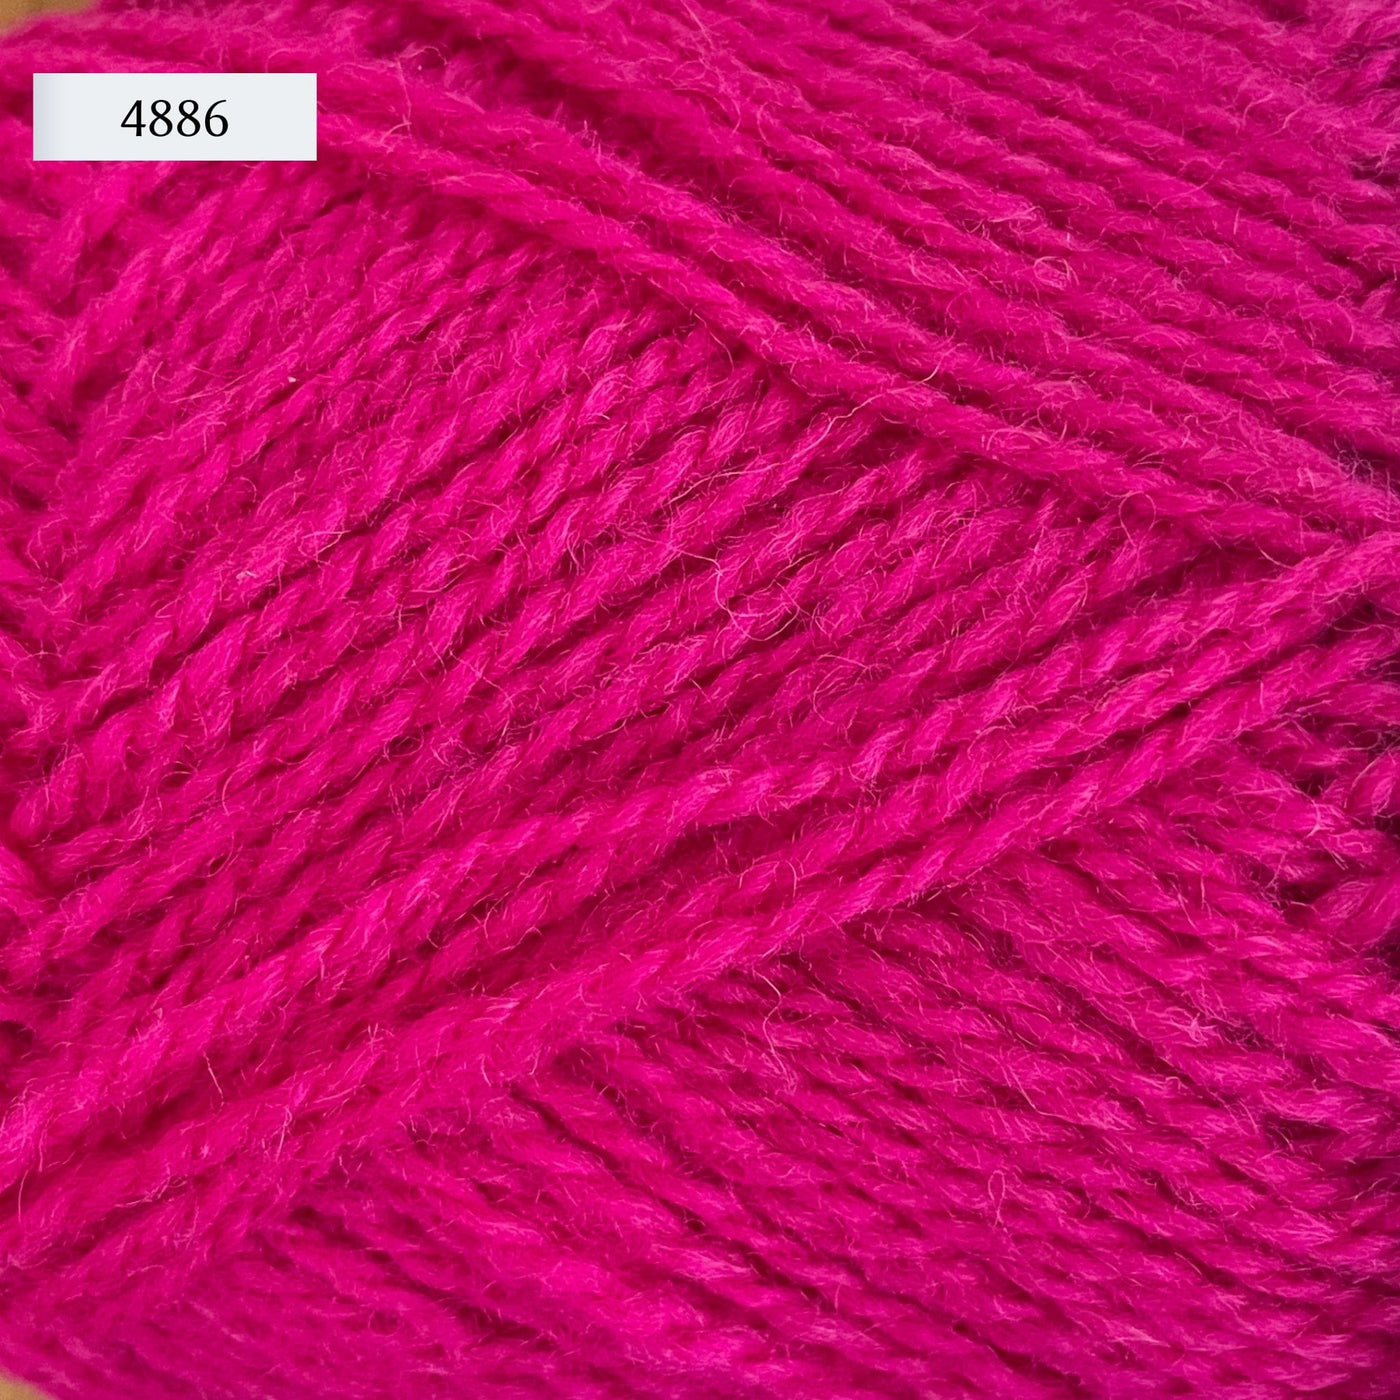  Gründl Color, Value Pack: 10 Balls of 50 g Felt Wool, Orange,  Fuchsia, Purple, Multicoloured, 31 x 32 x 6 cm : Everything Else